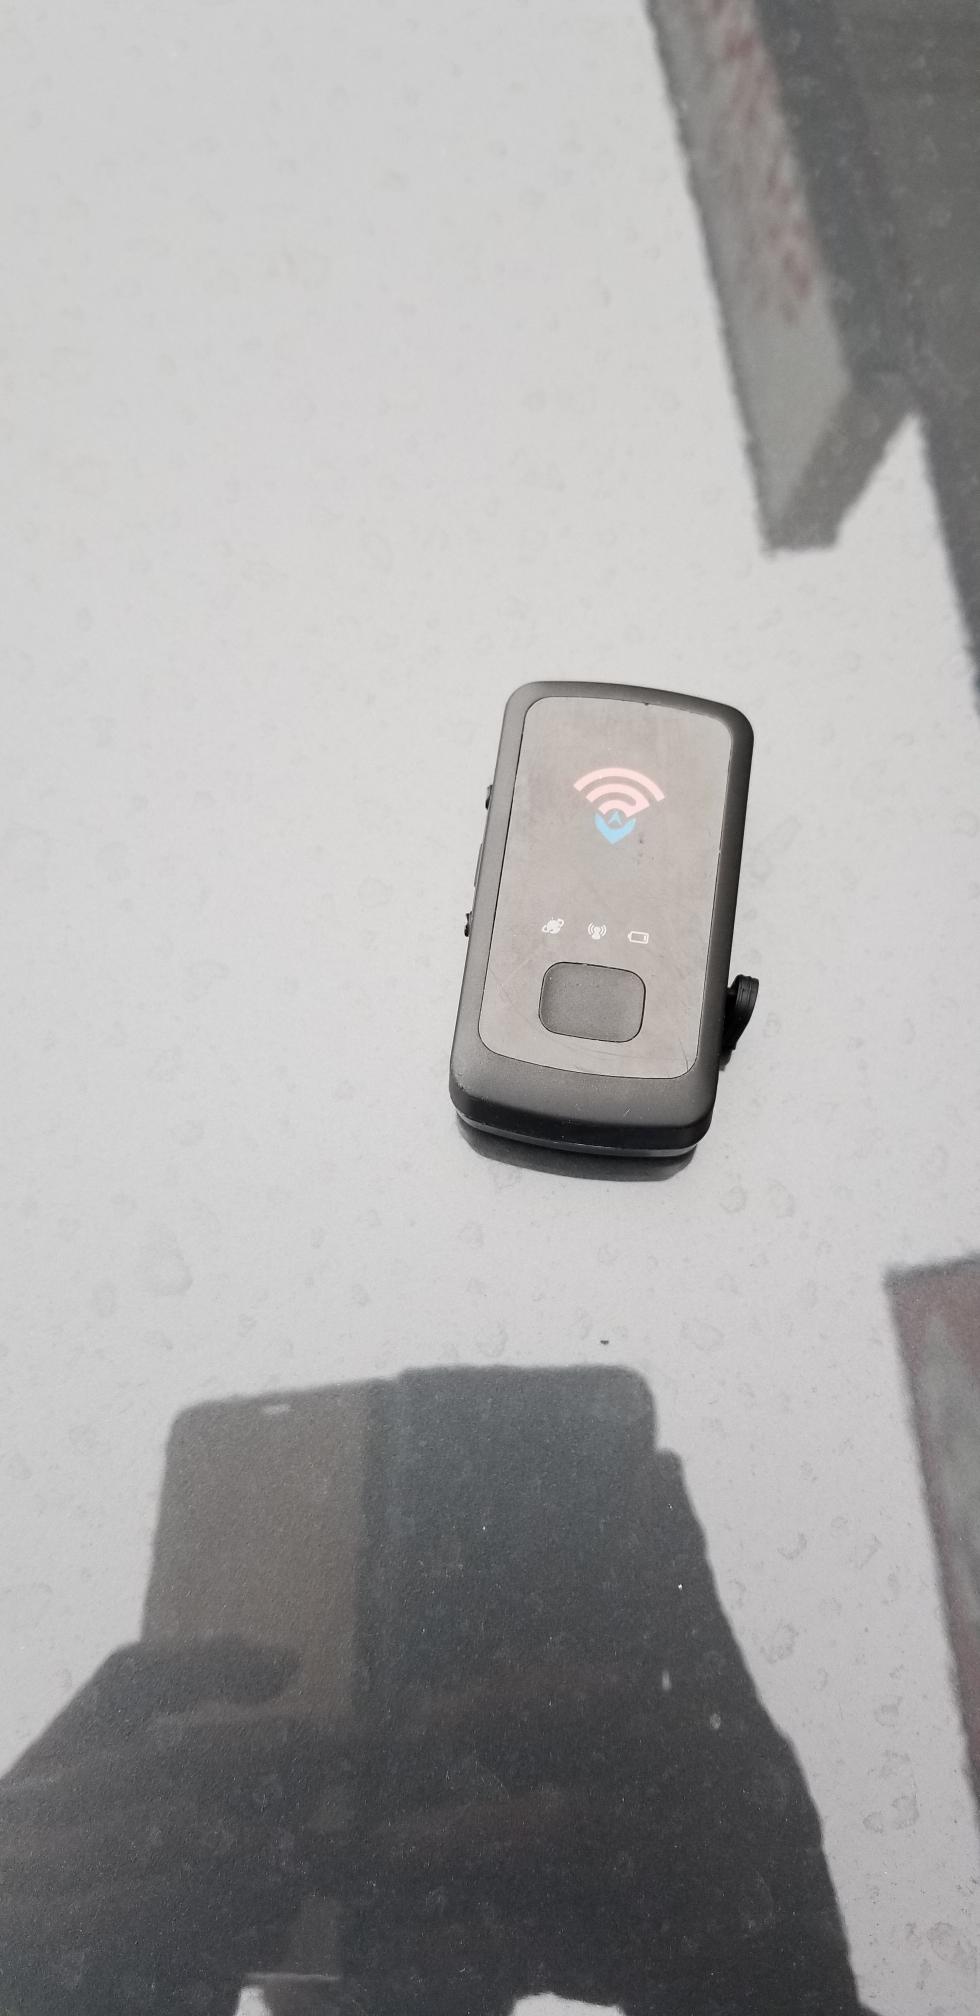 Tracking device found in boyfriends car